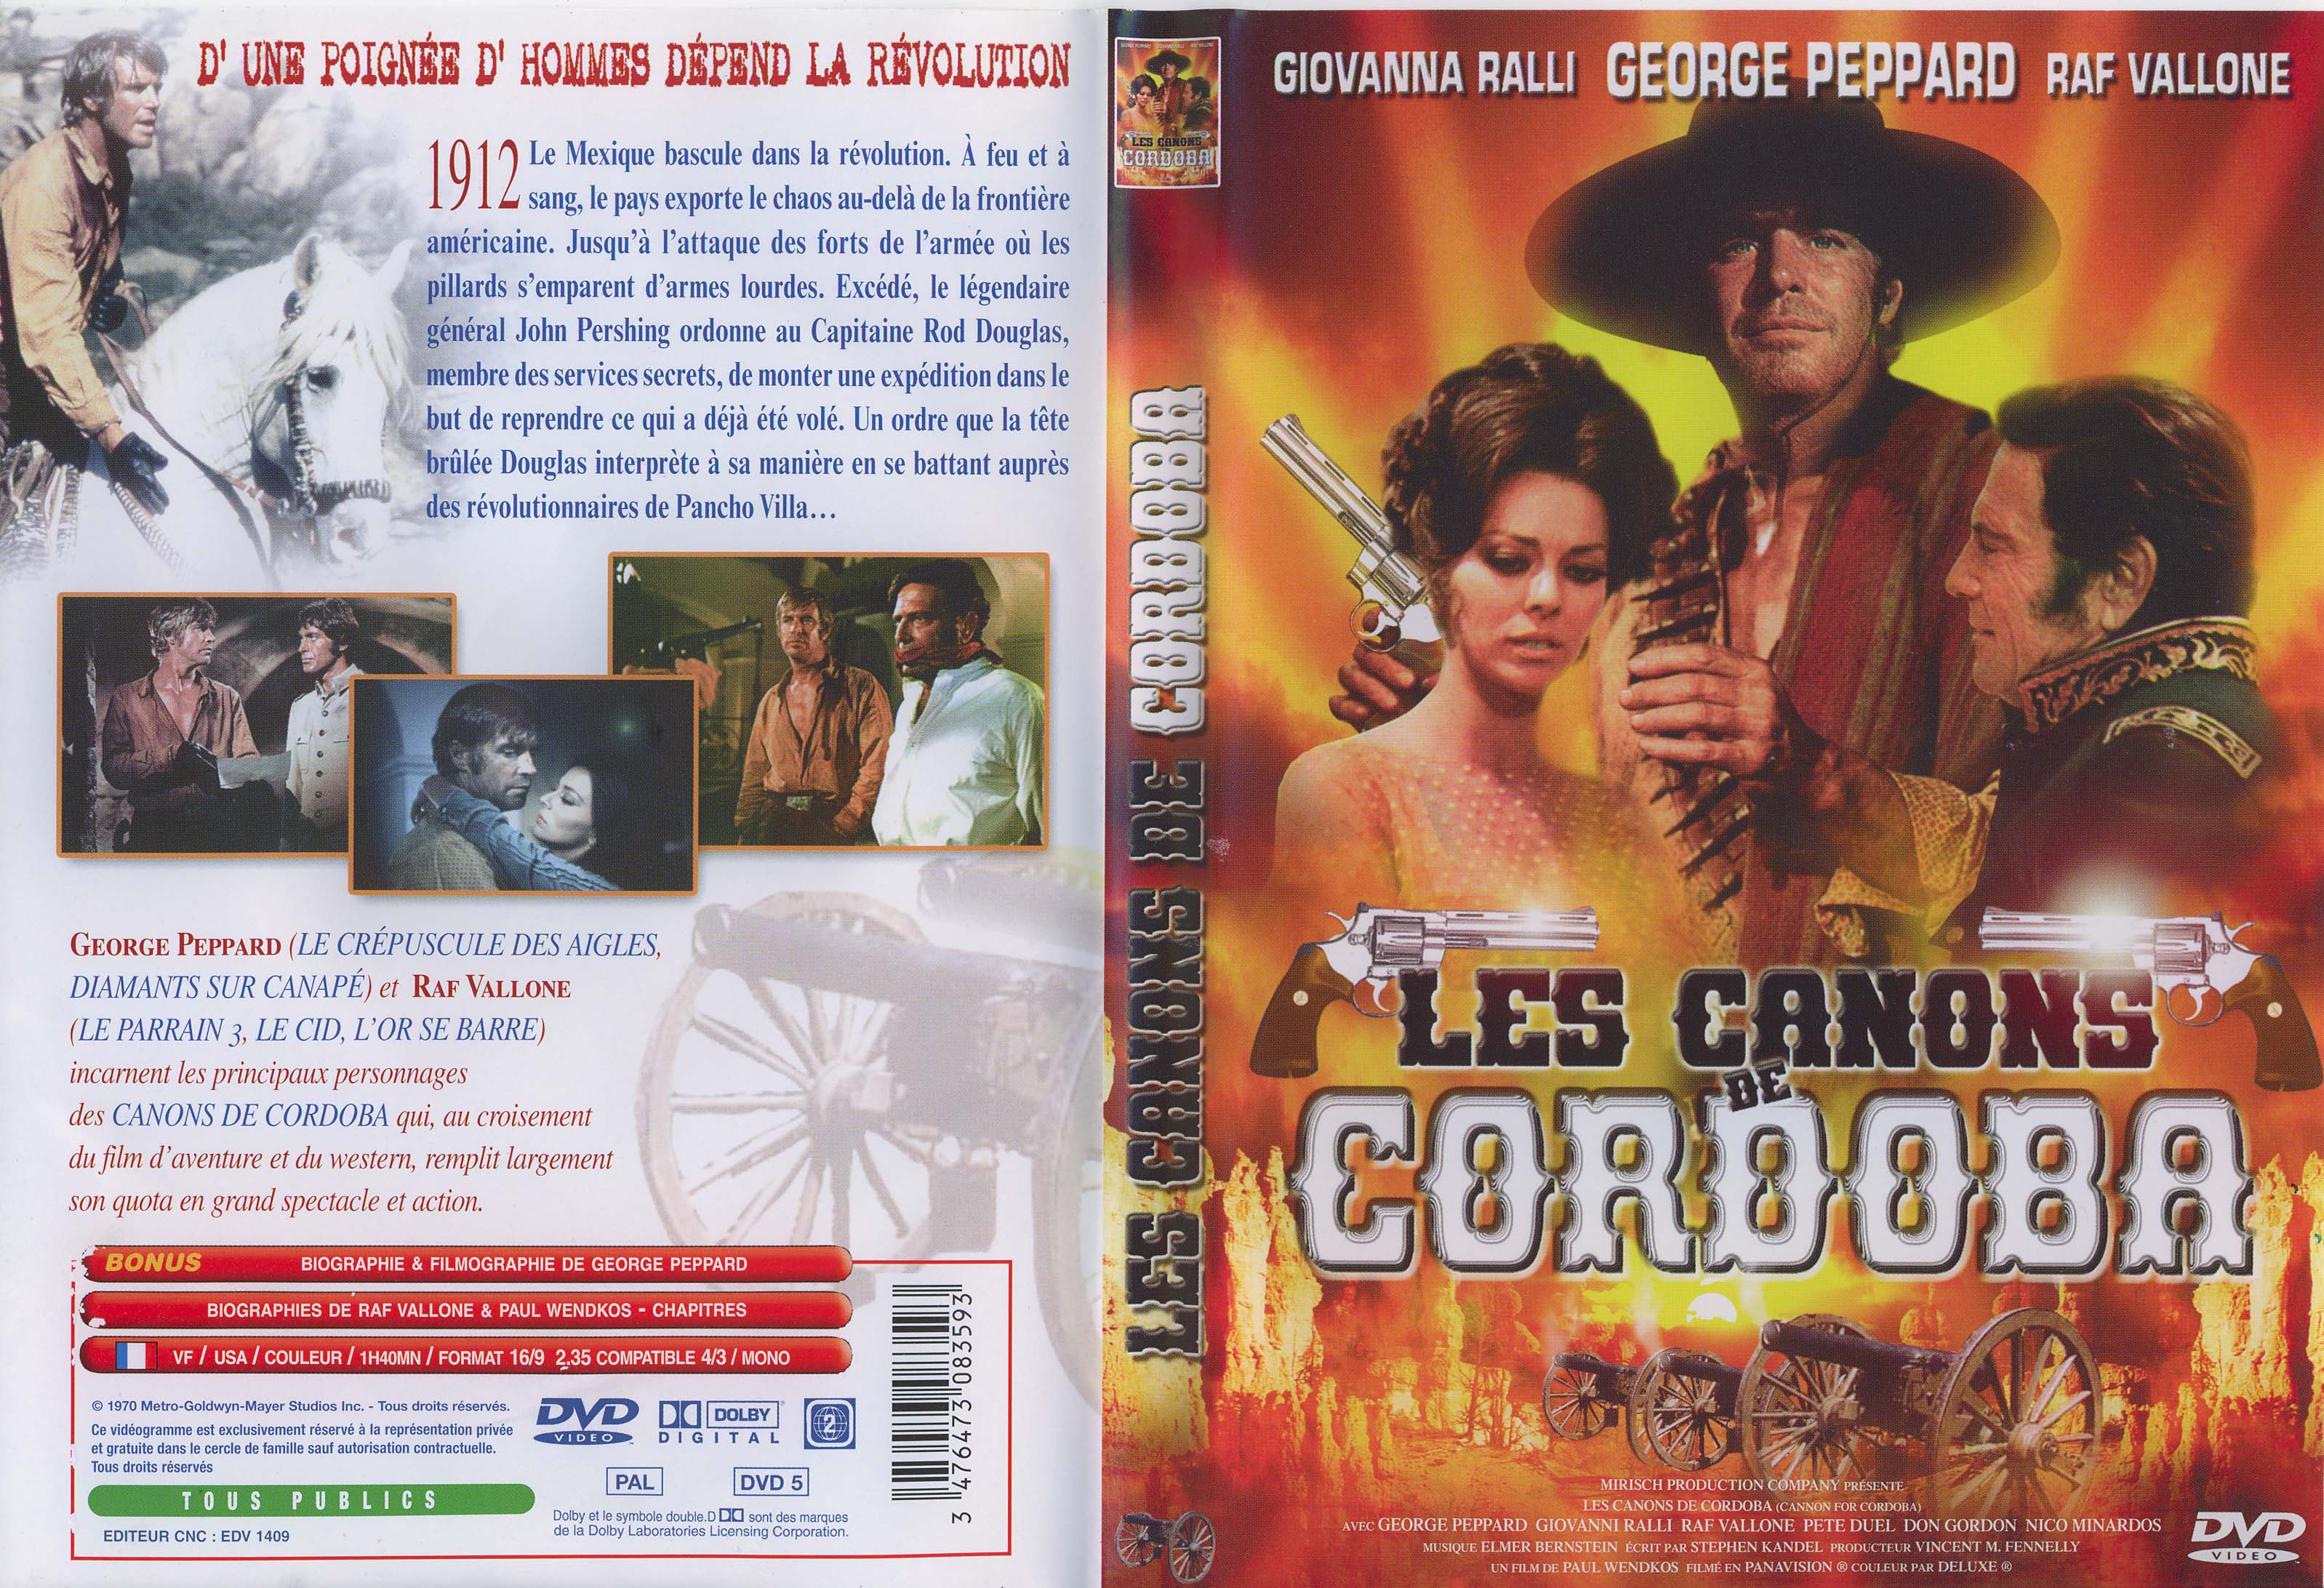 Jaquette DVD Les canons de Cordoba